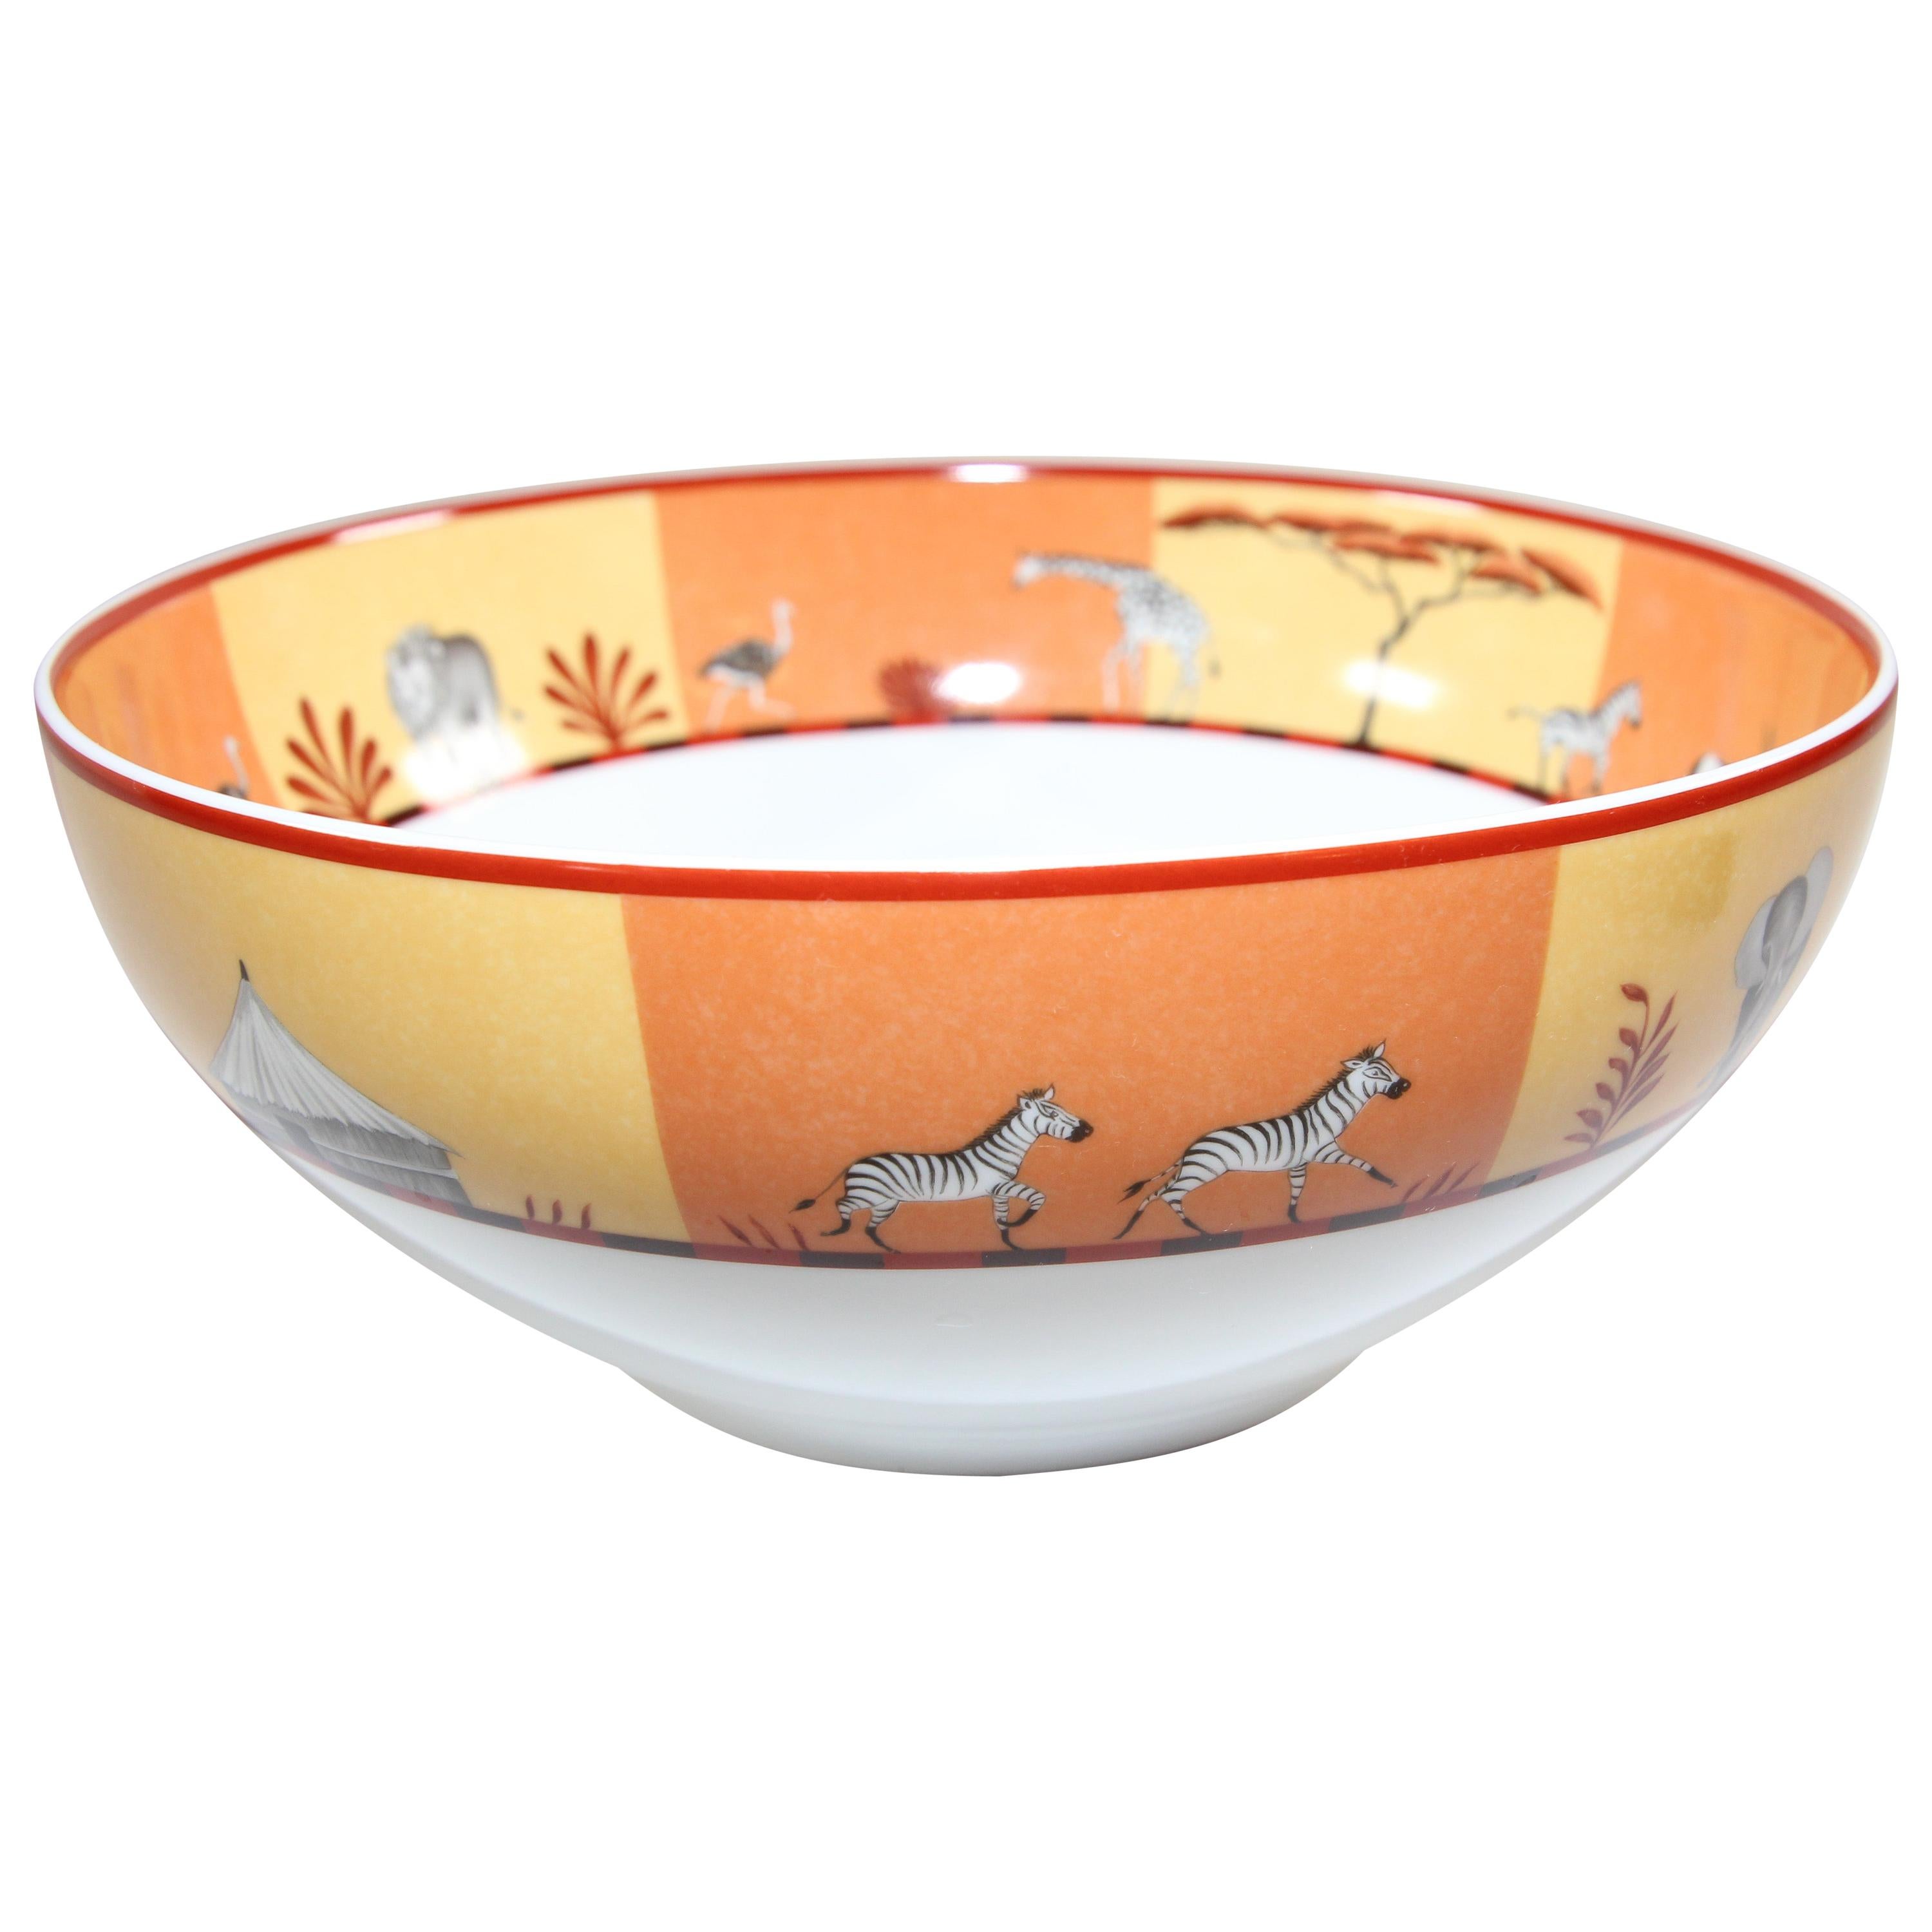 Hermès Africa Orange Large Porcelain Salad Bowl with Safari Design